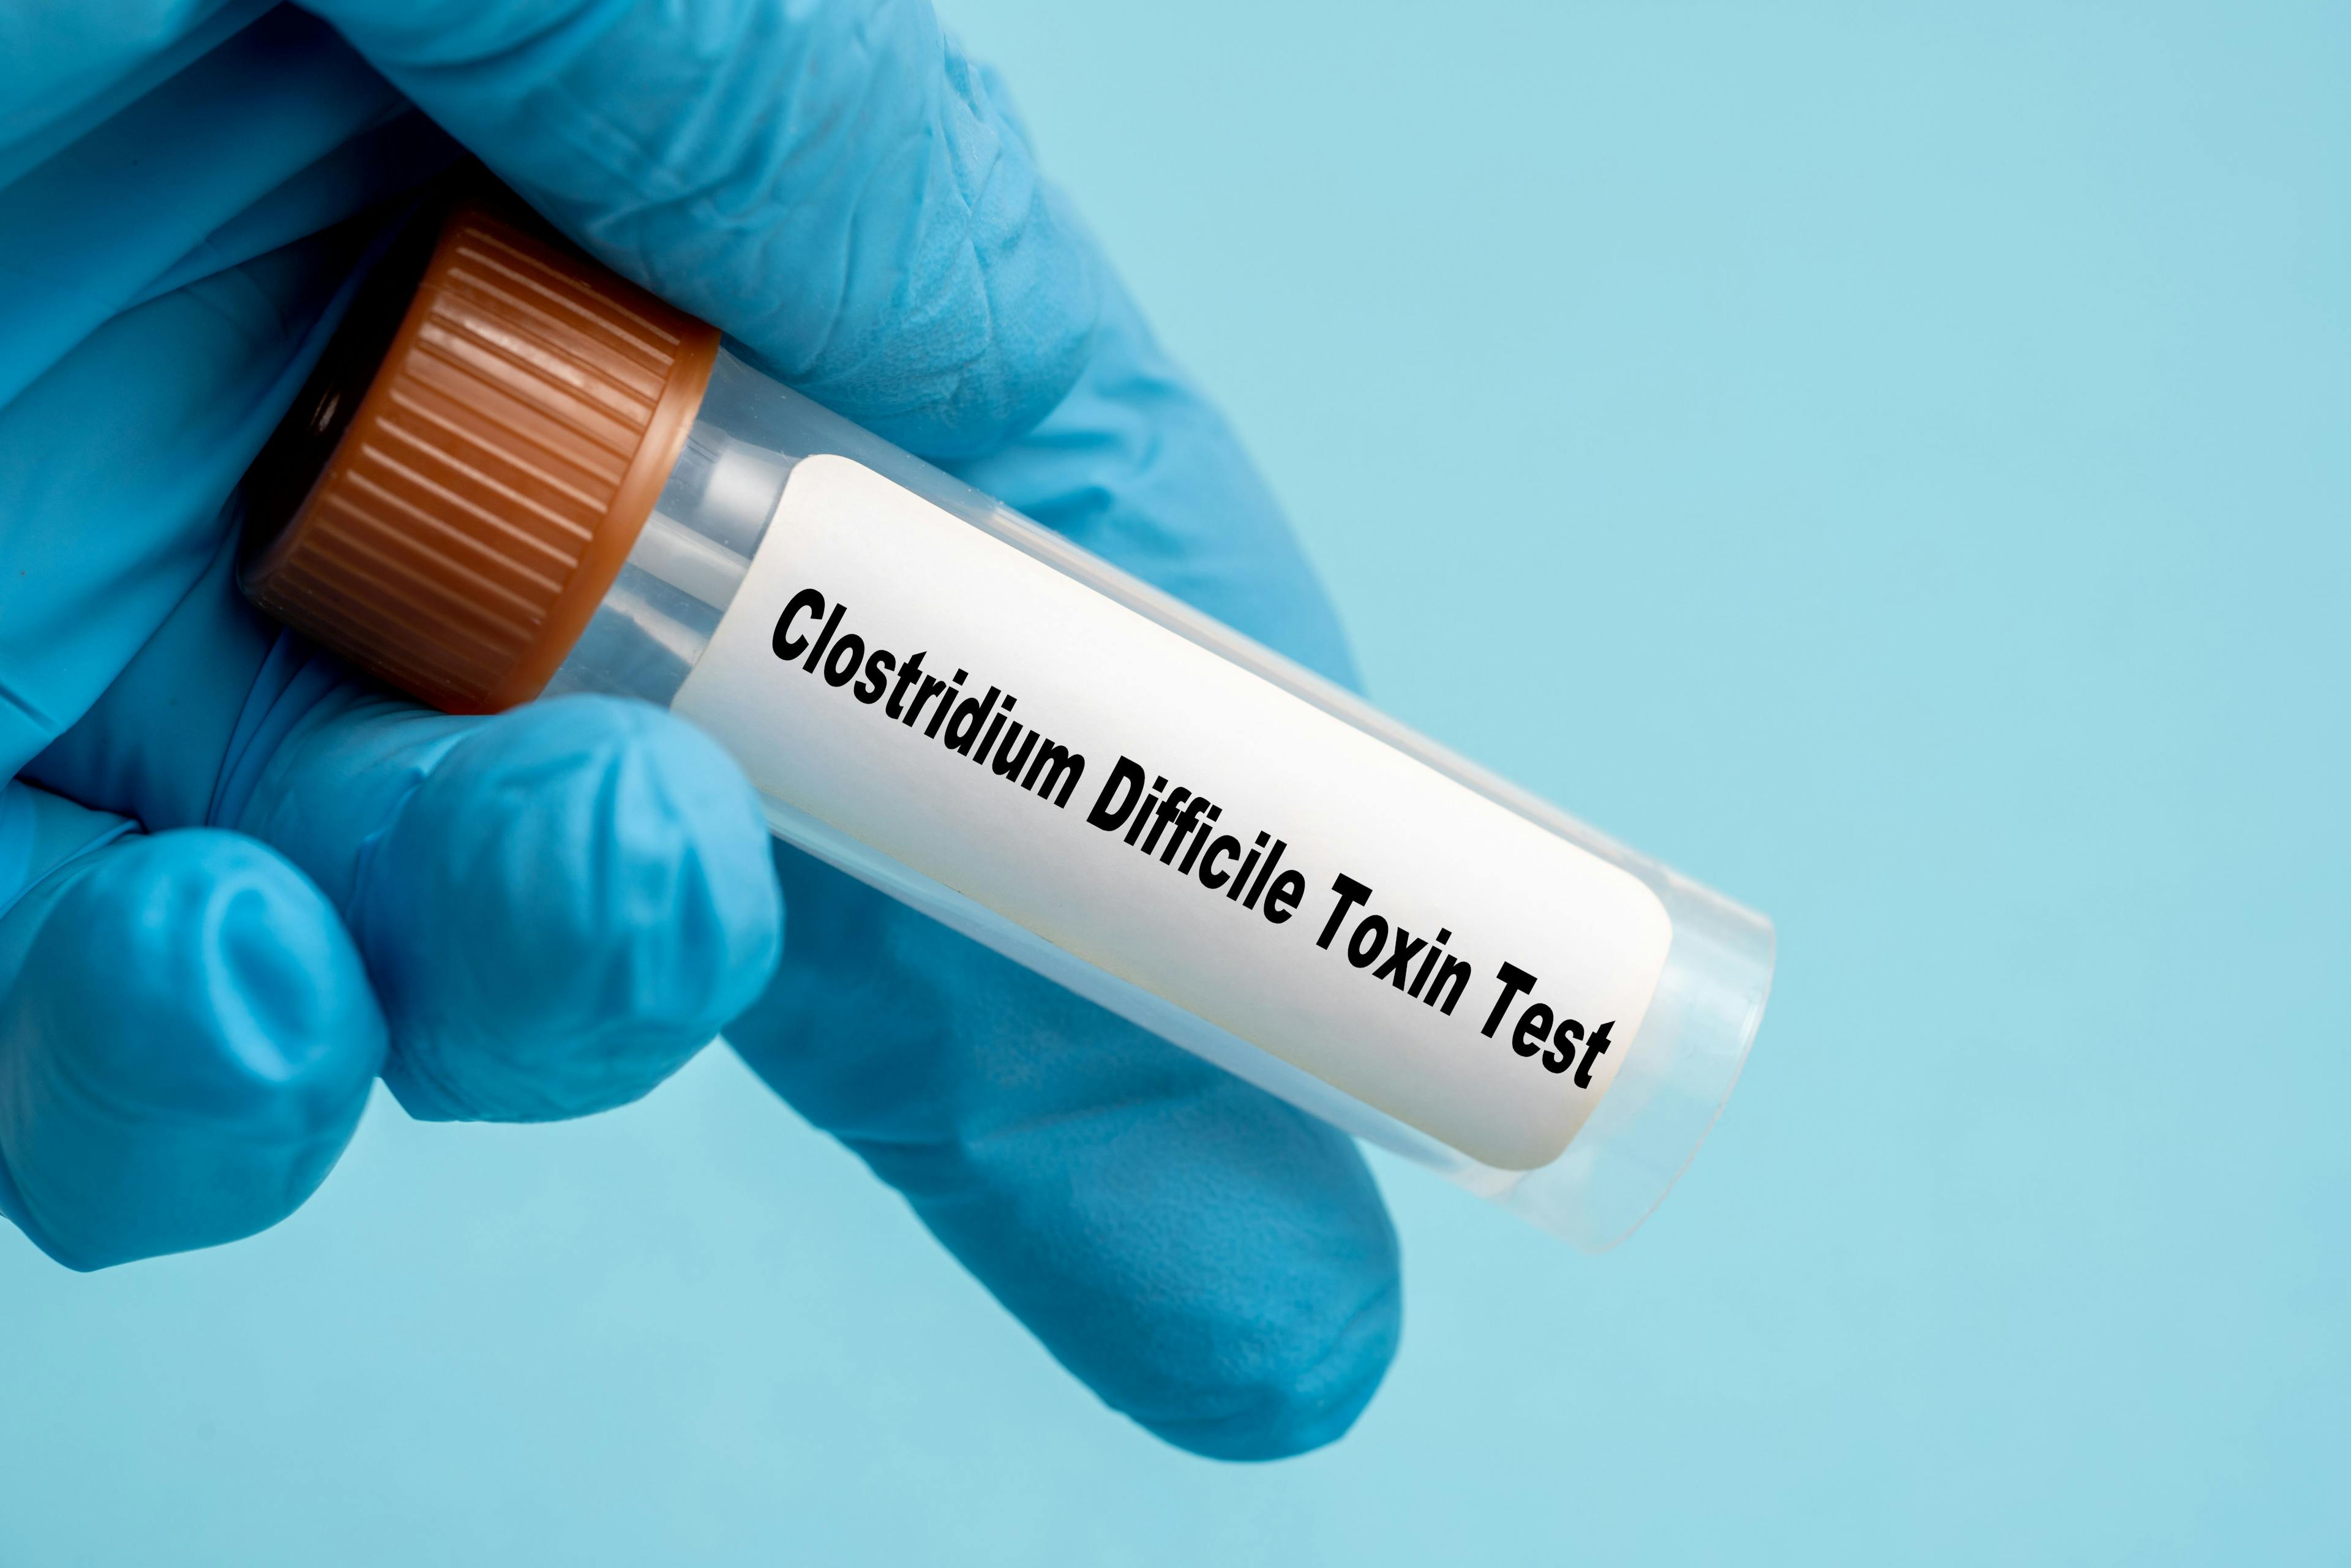 Clostridium Difficile Toxin Test -- Image credit: luchschenF | stock.adobe.com